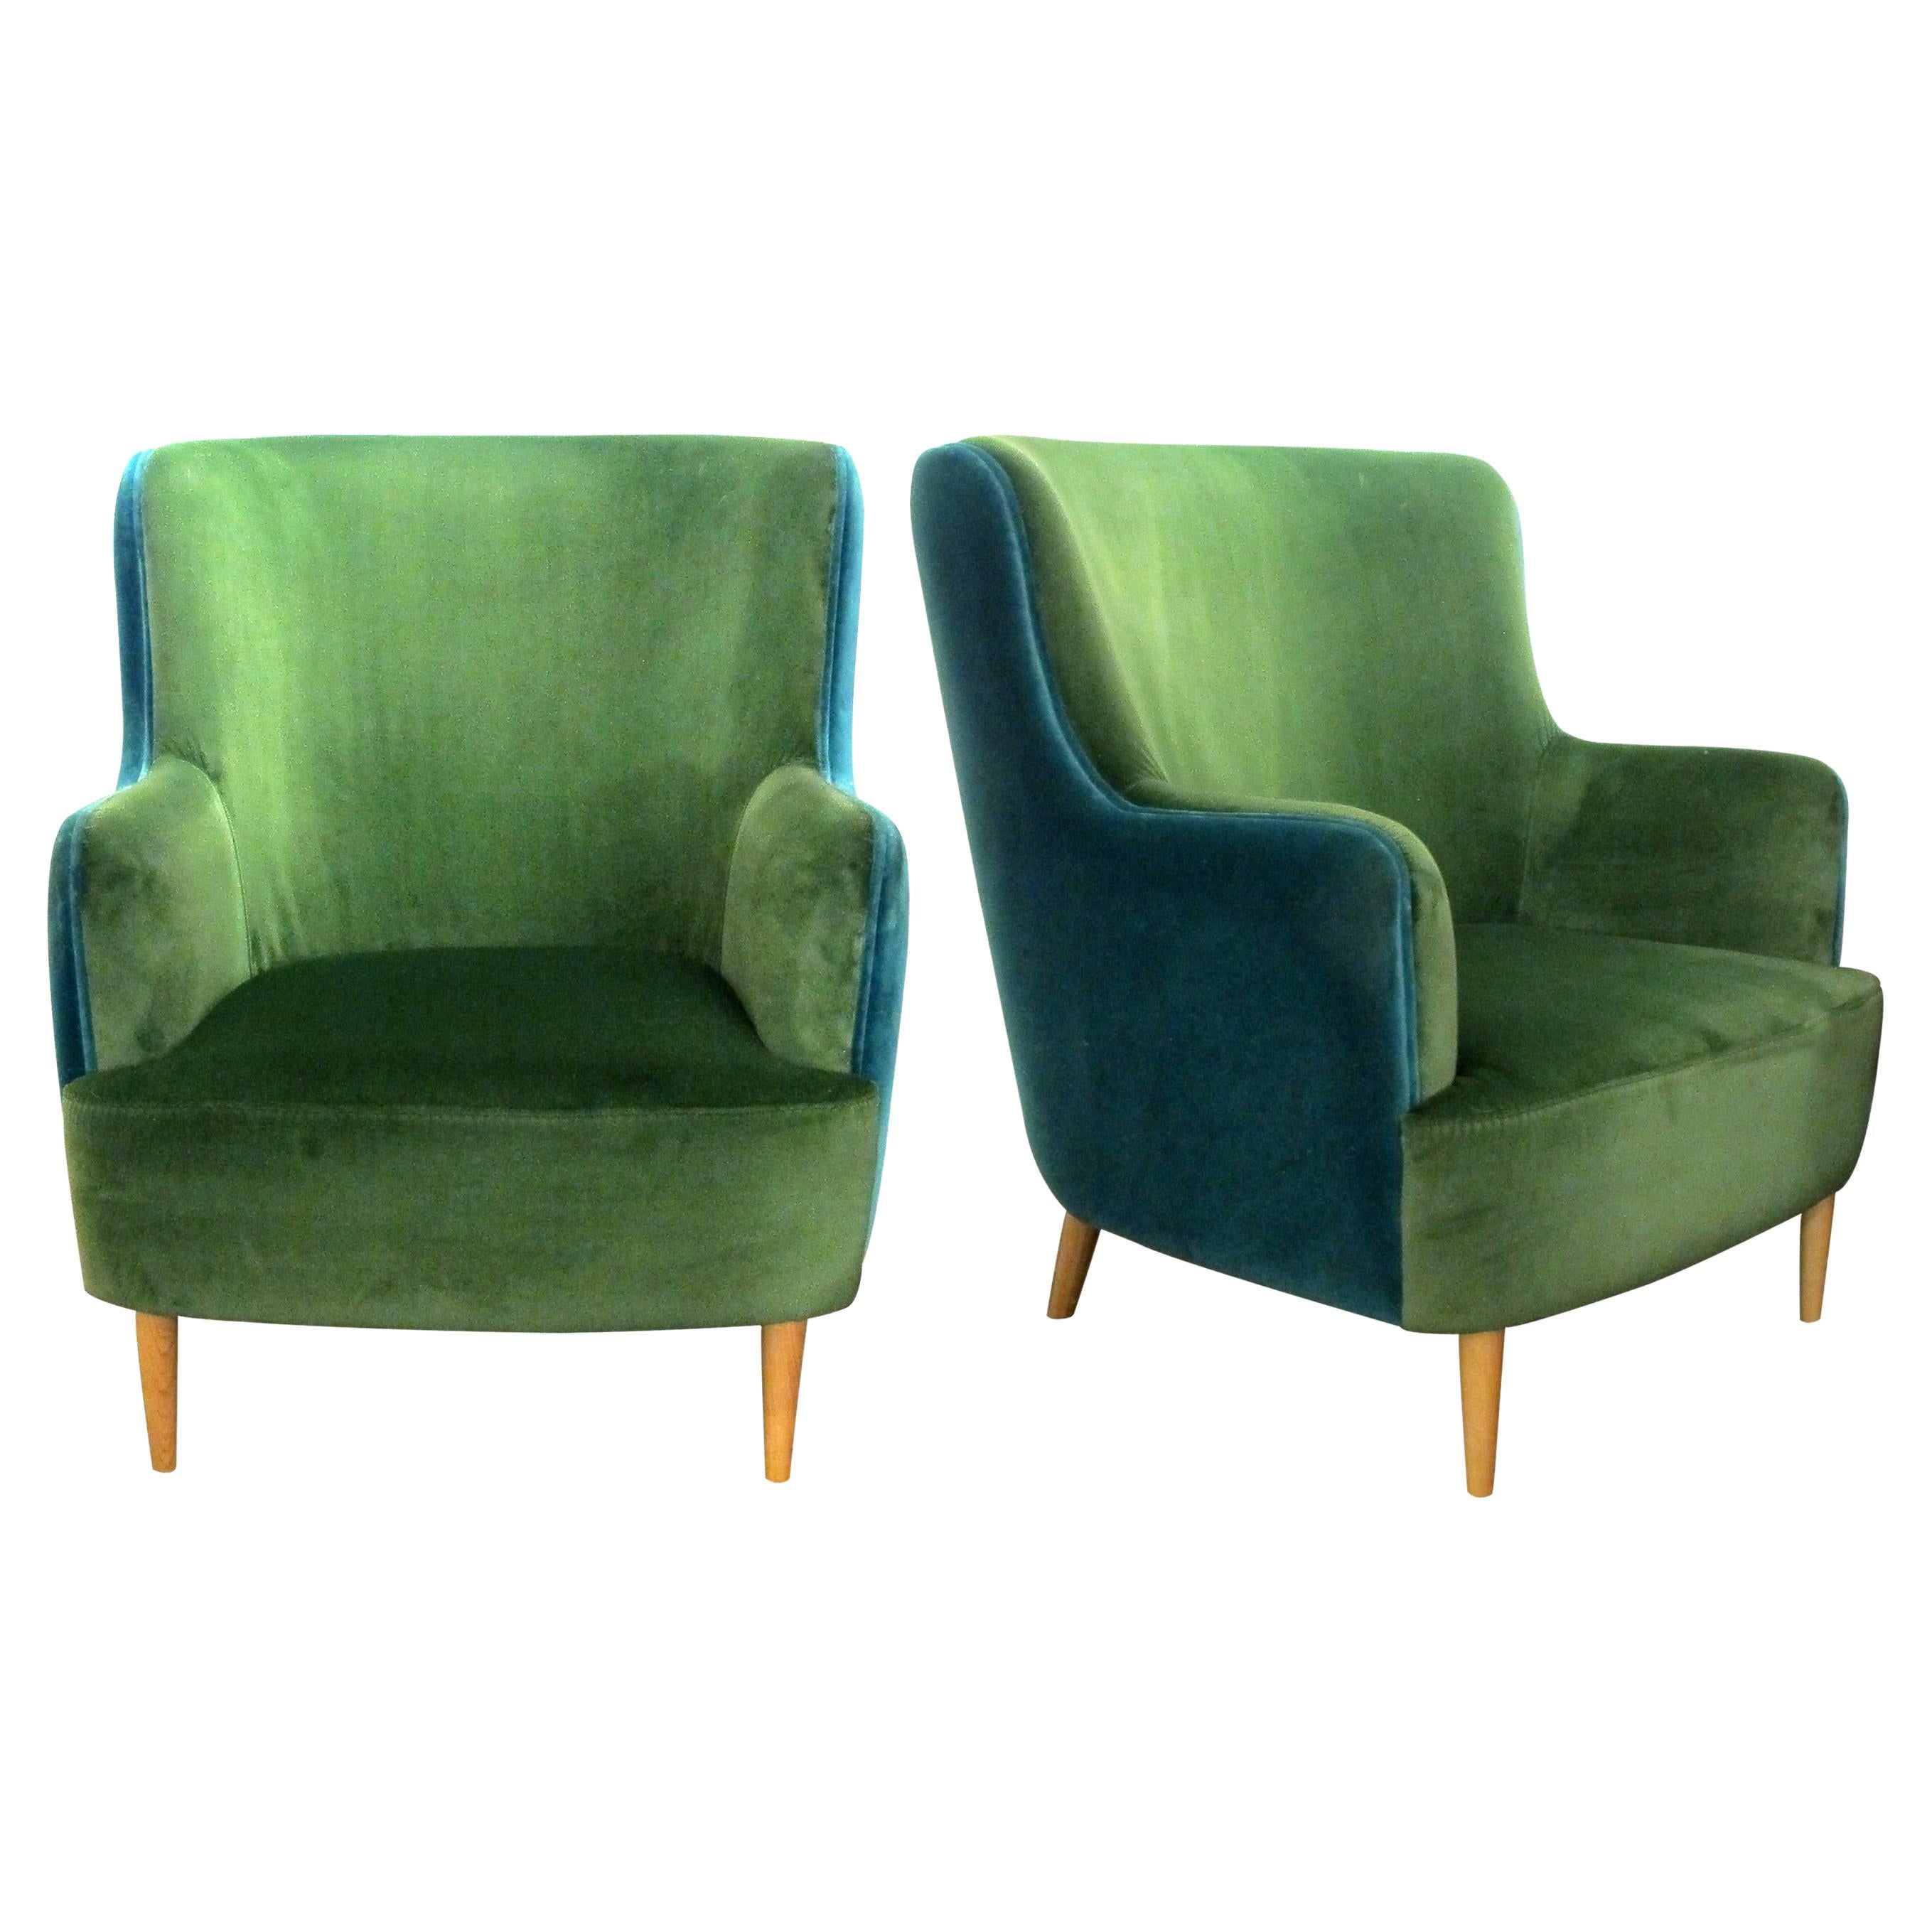 Pair of Custom Made Armchairs Upholstered in Green & Torquoise Velvet Fabric